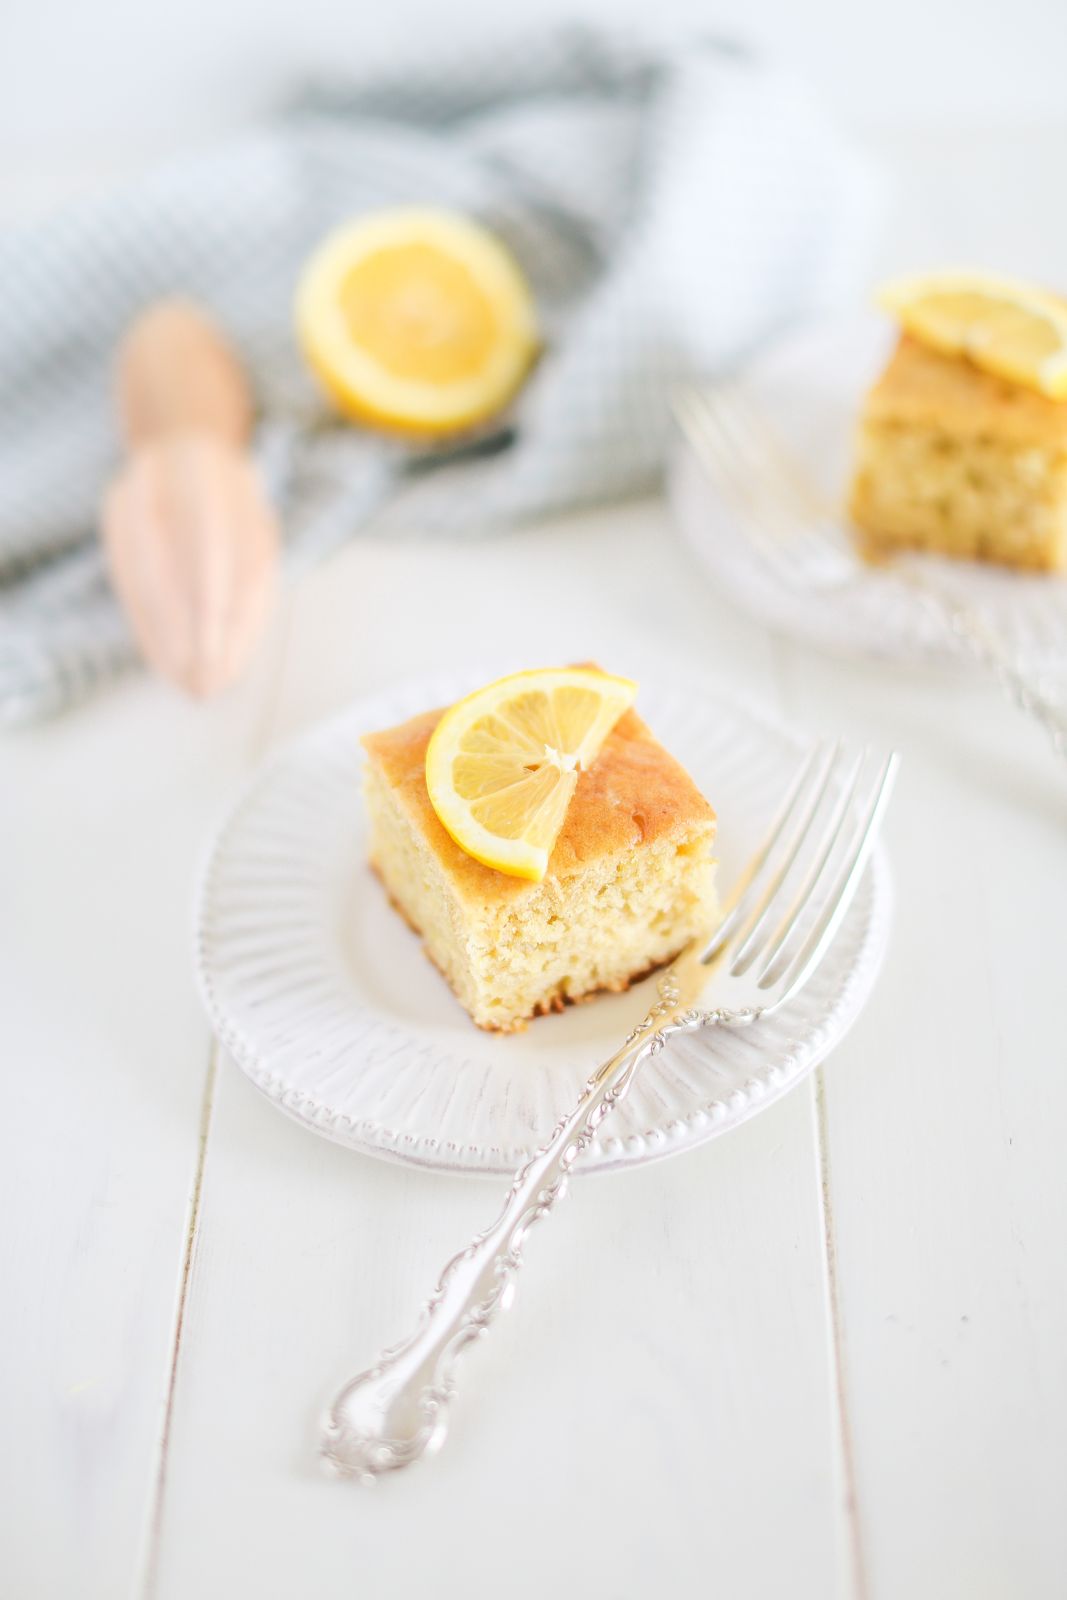 Lemon Sourdough Cake and other recipes for using up sourdough discard.